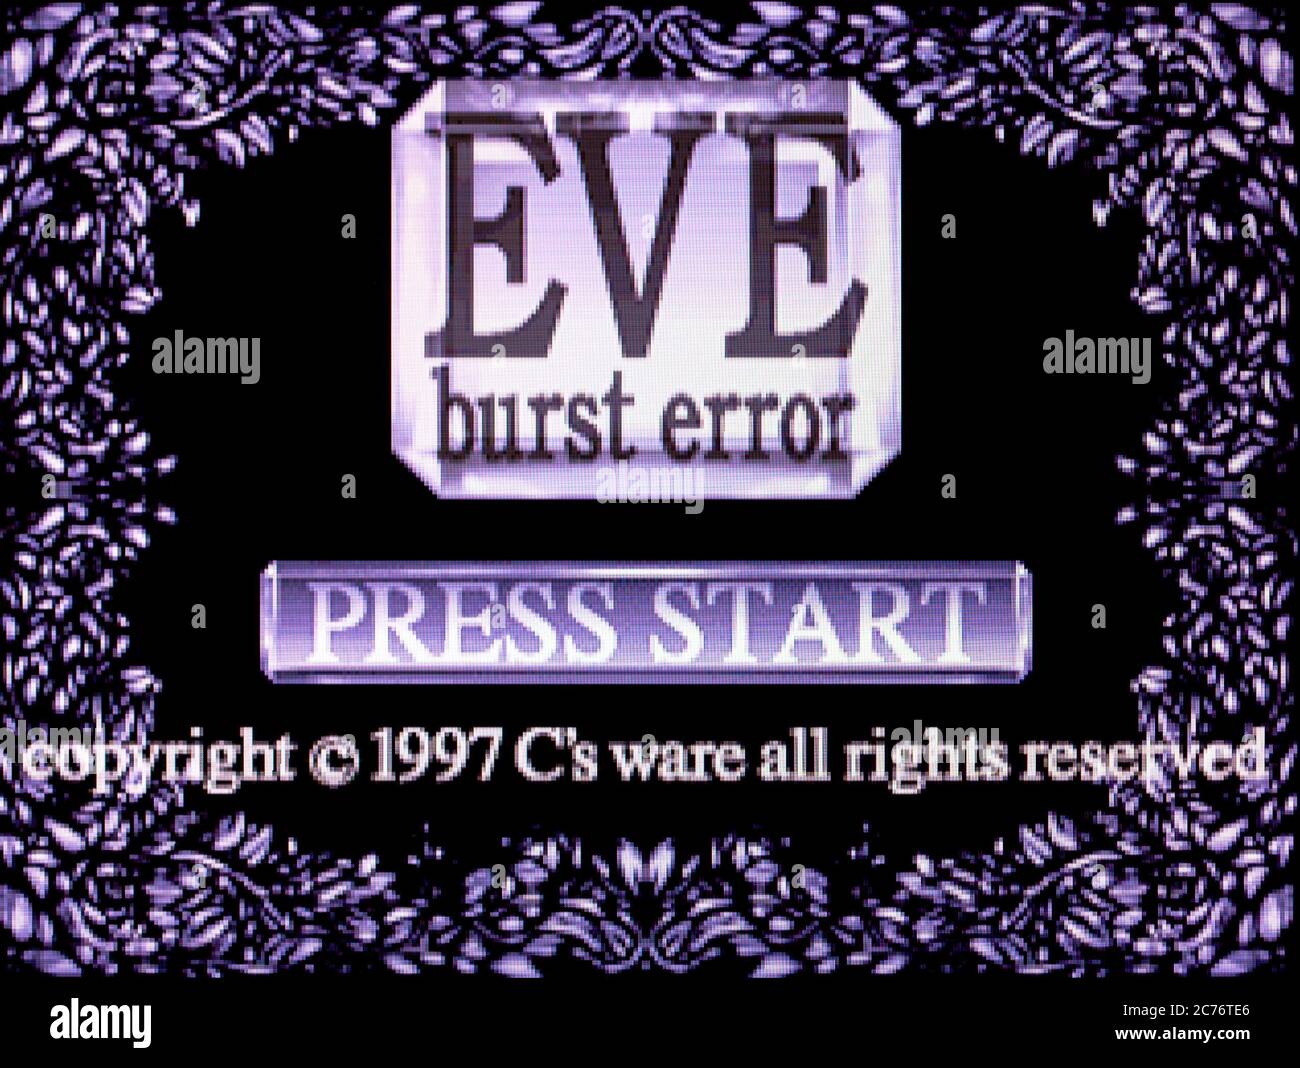 Eve Burst Error - Sega Saturn Videogame - Editorial use only Stock Photo